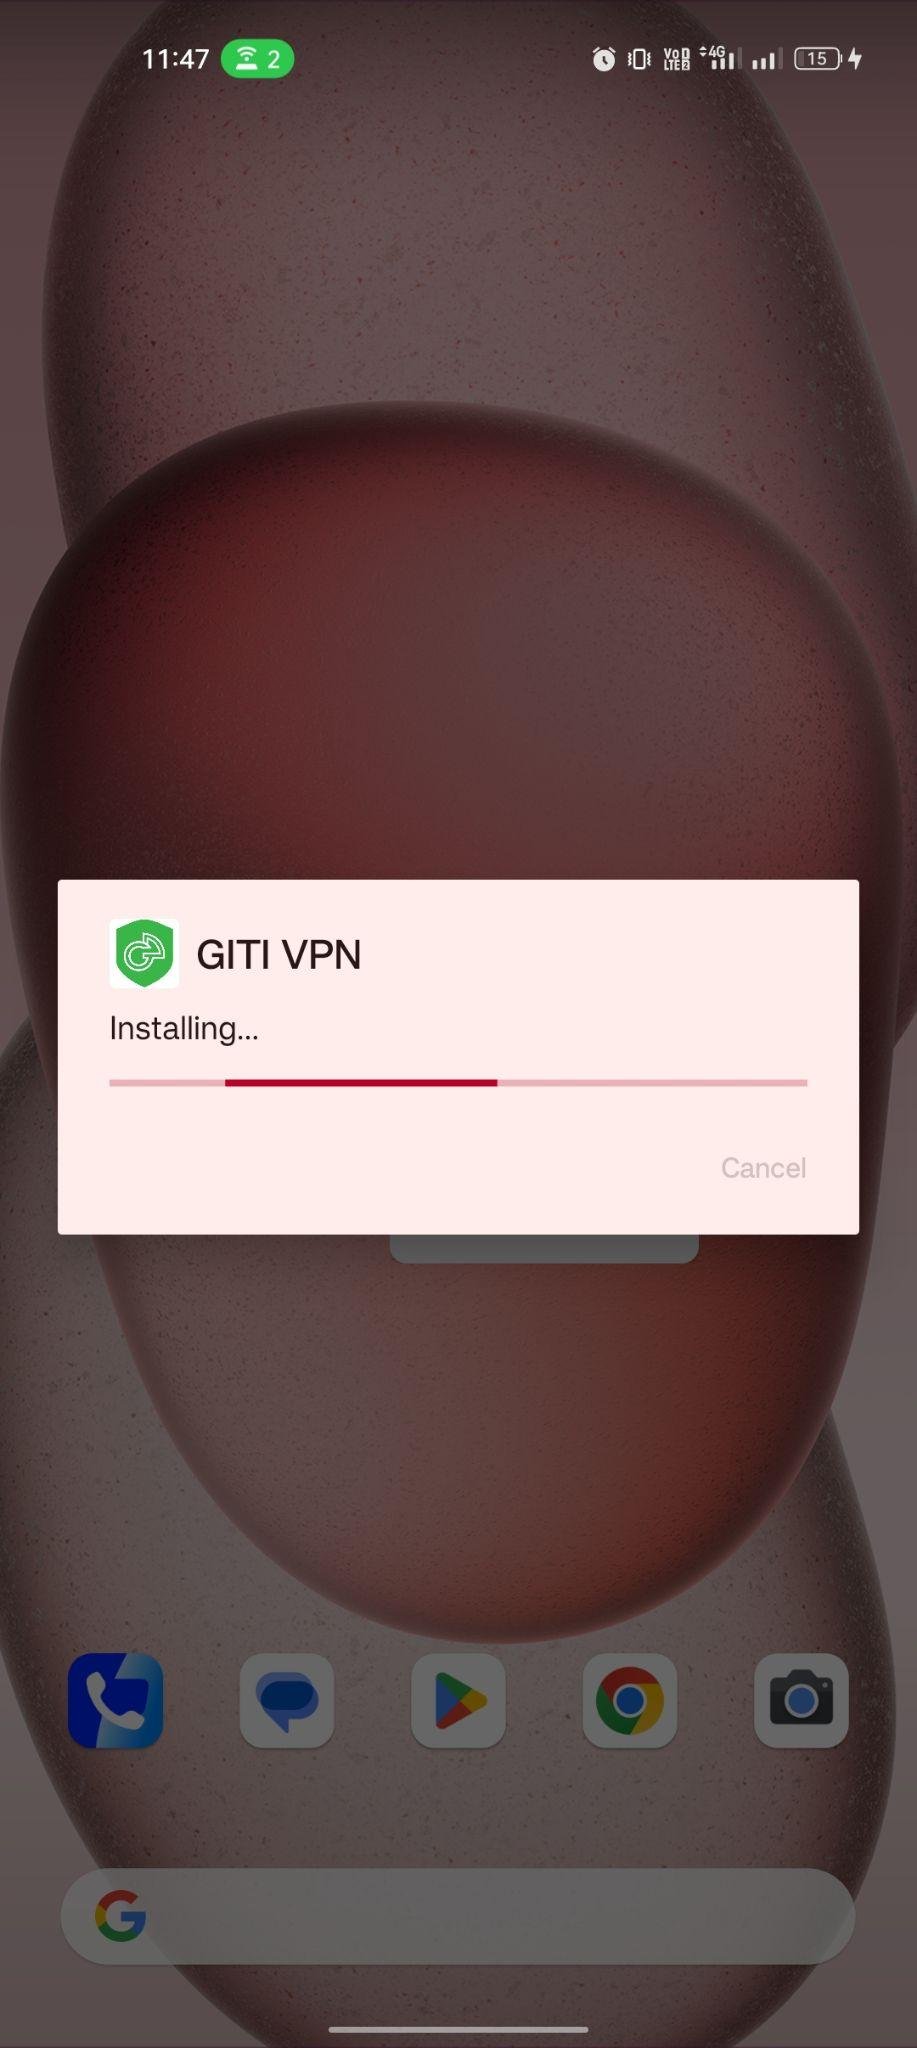 Giti VPN apk installing